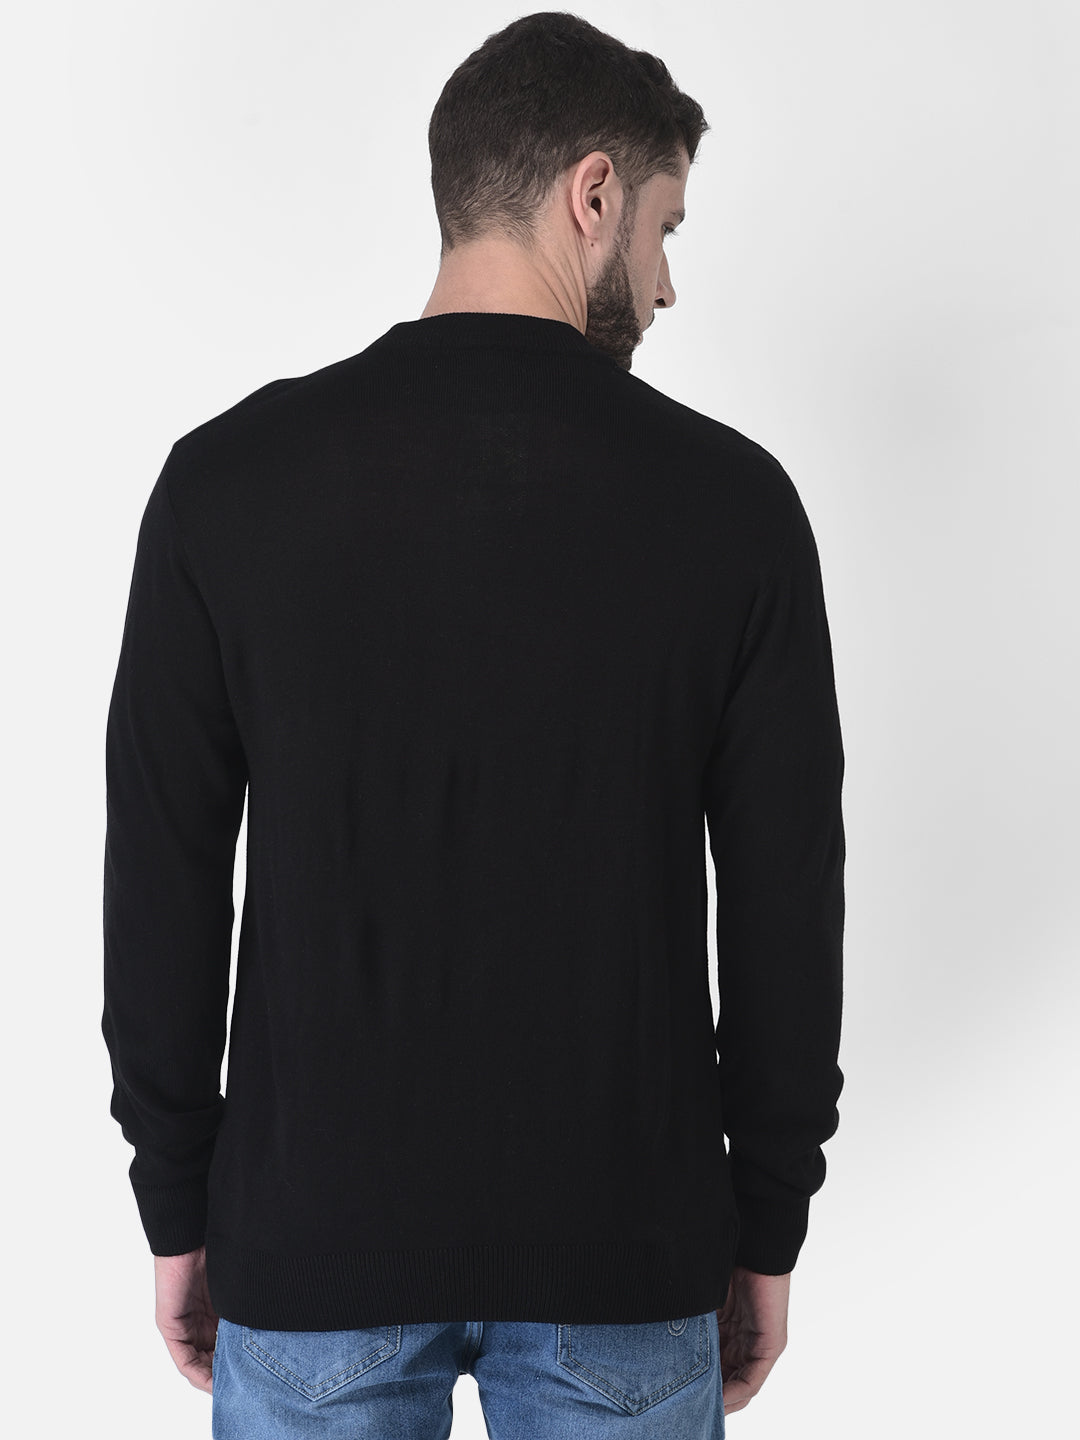 Cobb Black Solid Round Neck Sweater